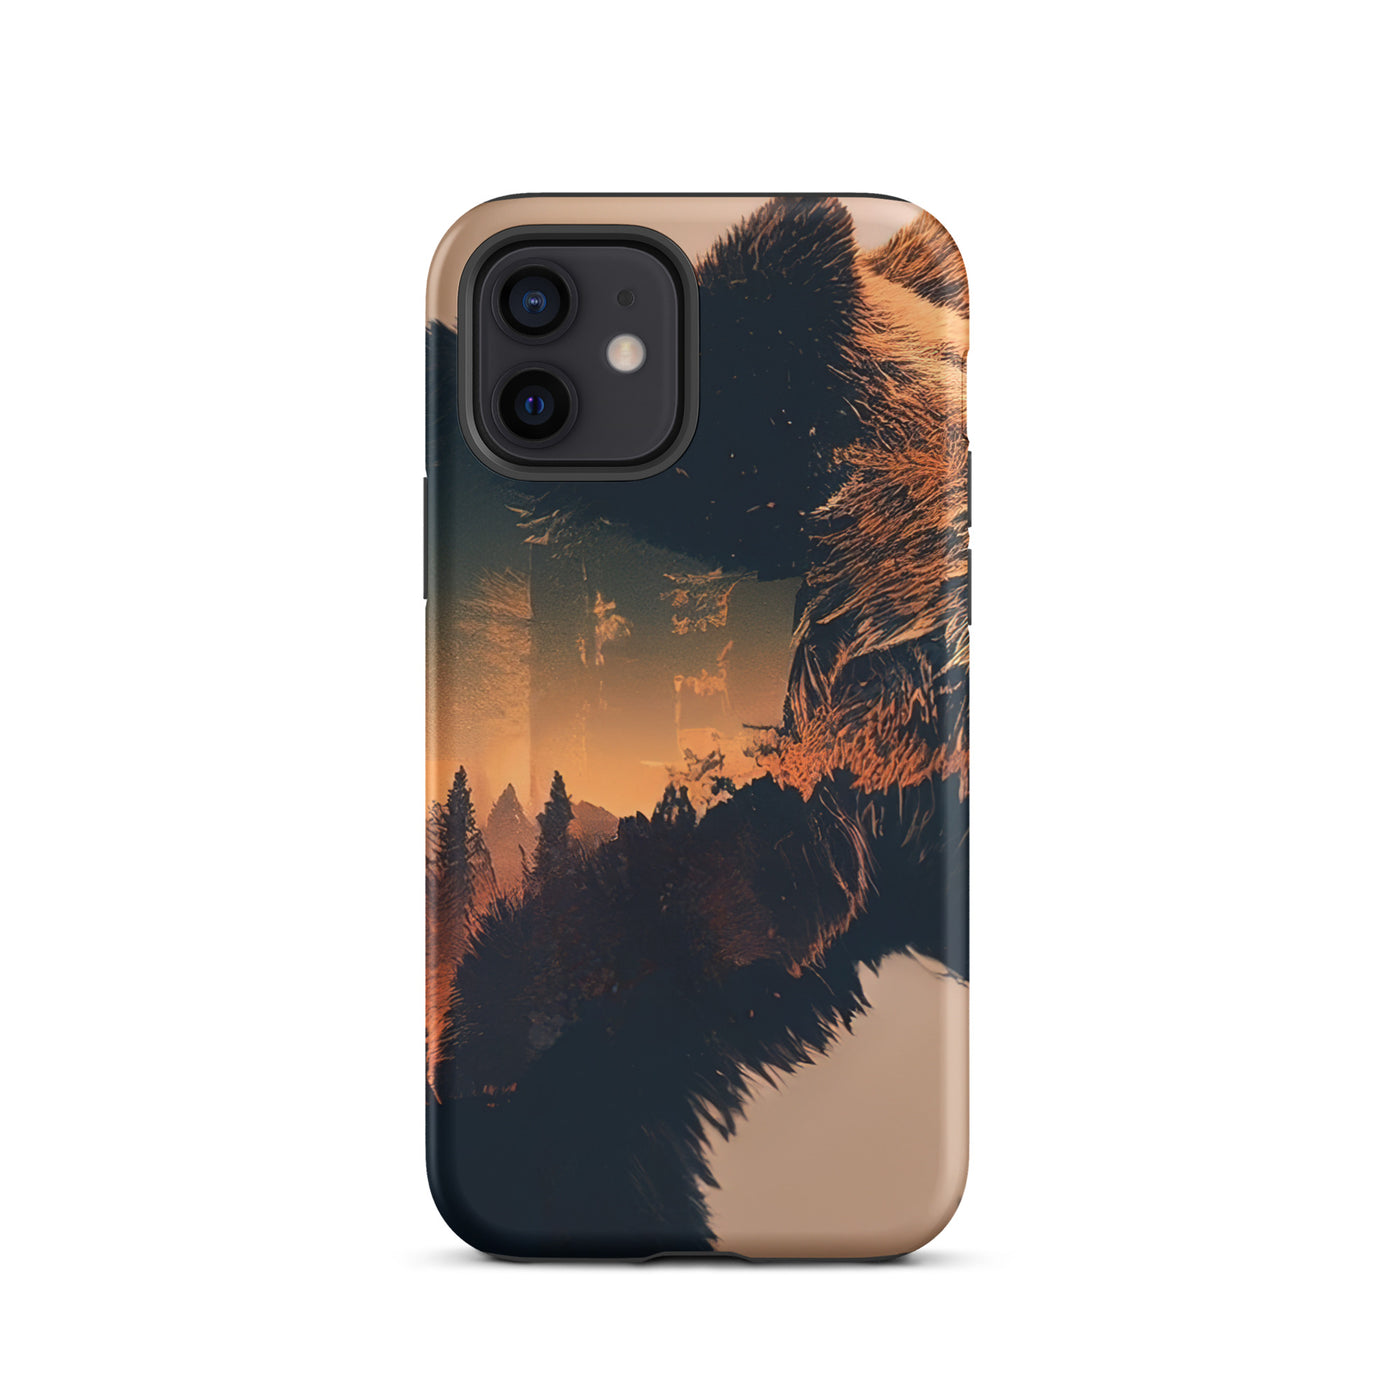 Bär und Bäume Illustration - iPhone Schutzhülle (robust) camping xxx iPhone 12